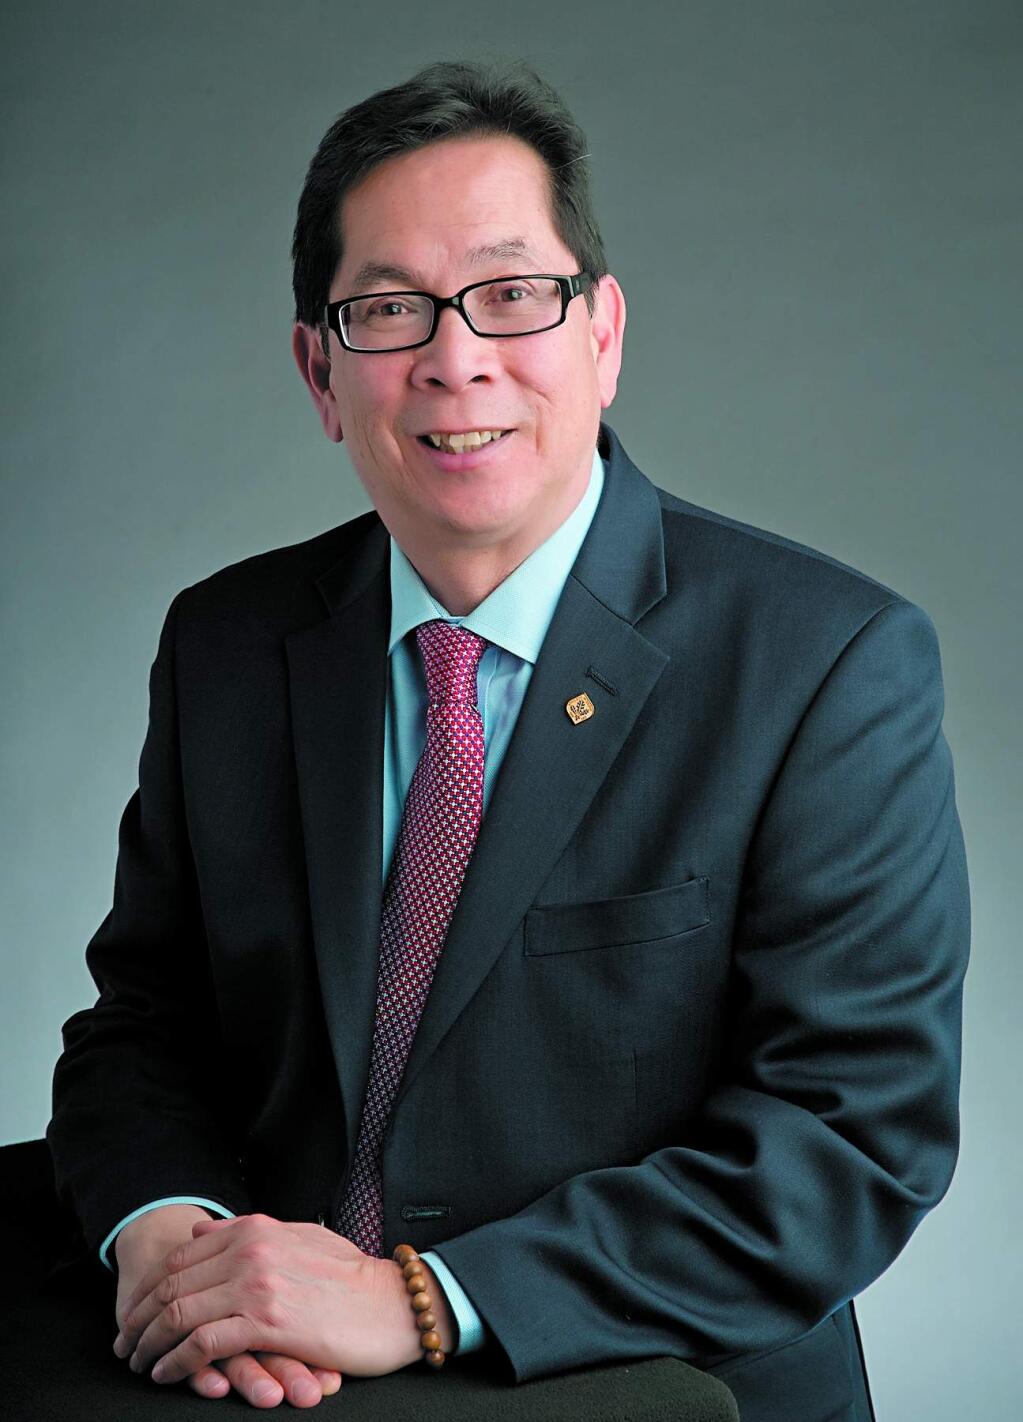 Frank Chong, Ph.D., president and superintendent of Santa Rosa Junior College